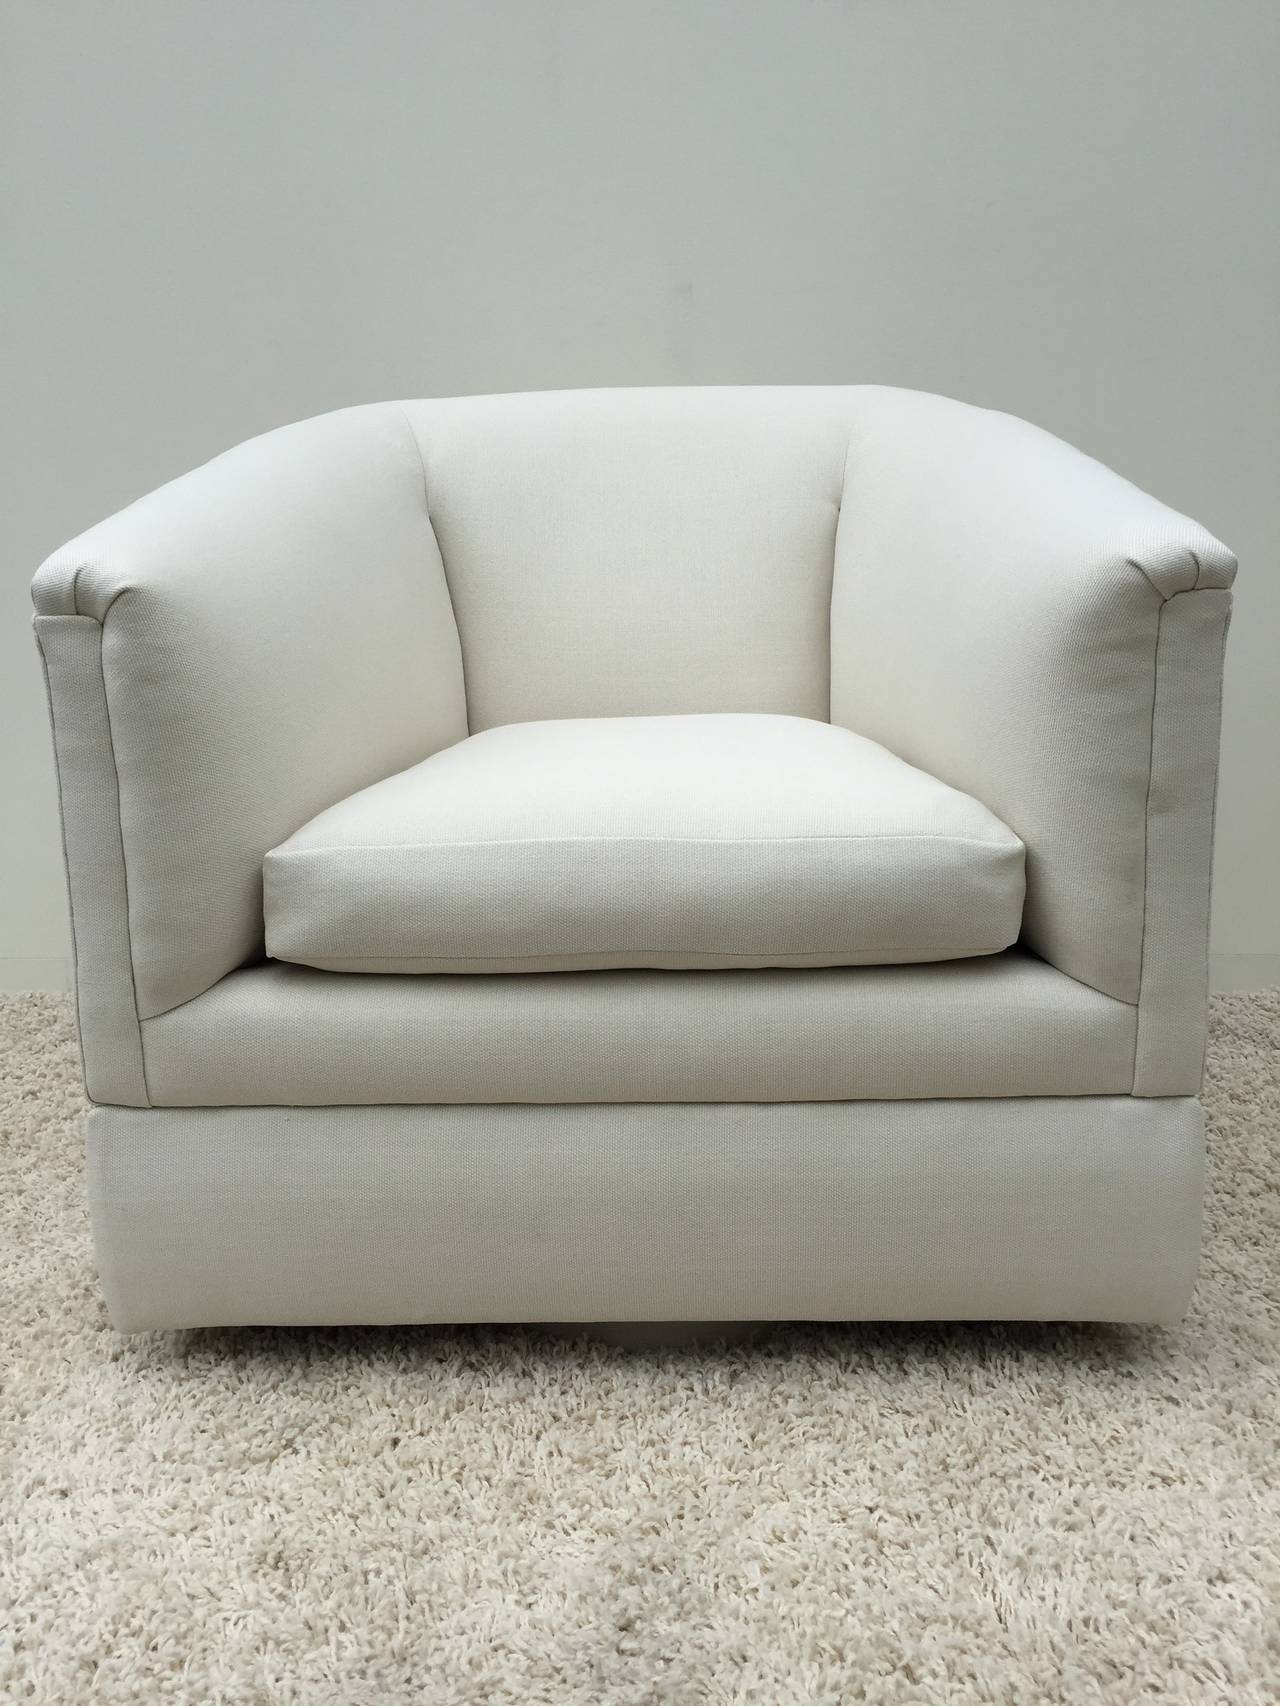 Pair Milo Baughman off white weaved fabric Swivel Chairs.